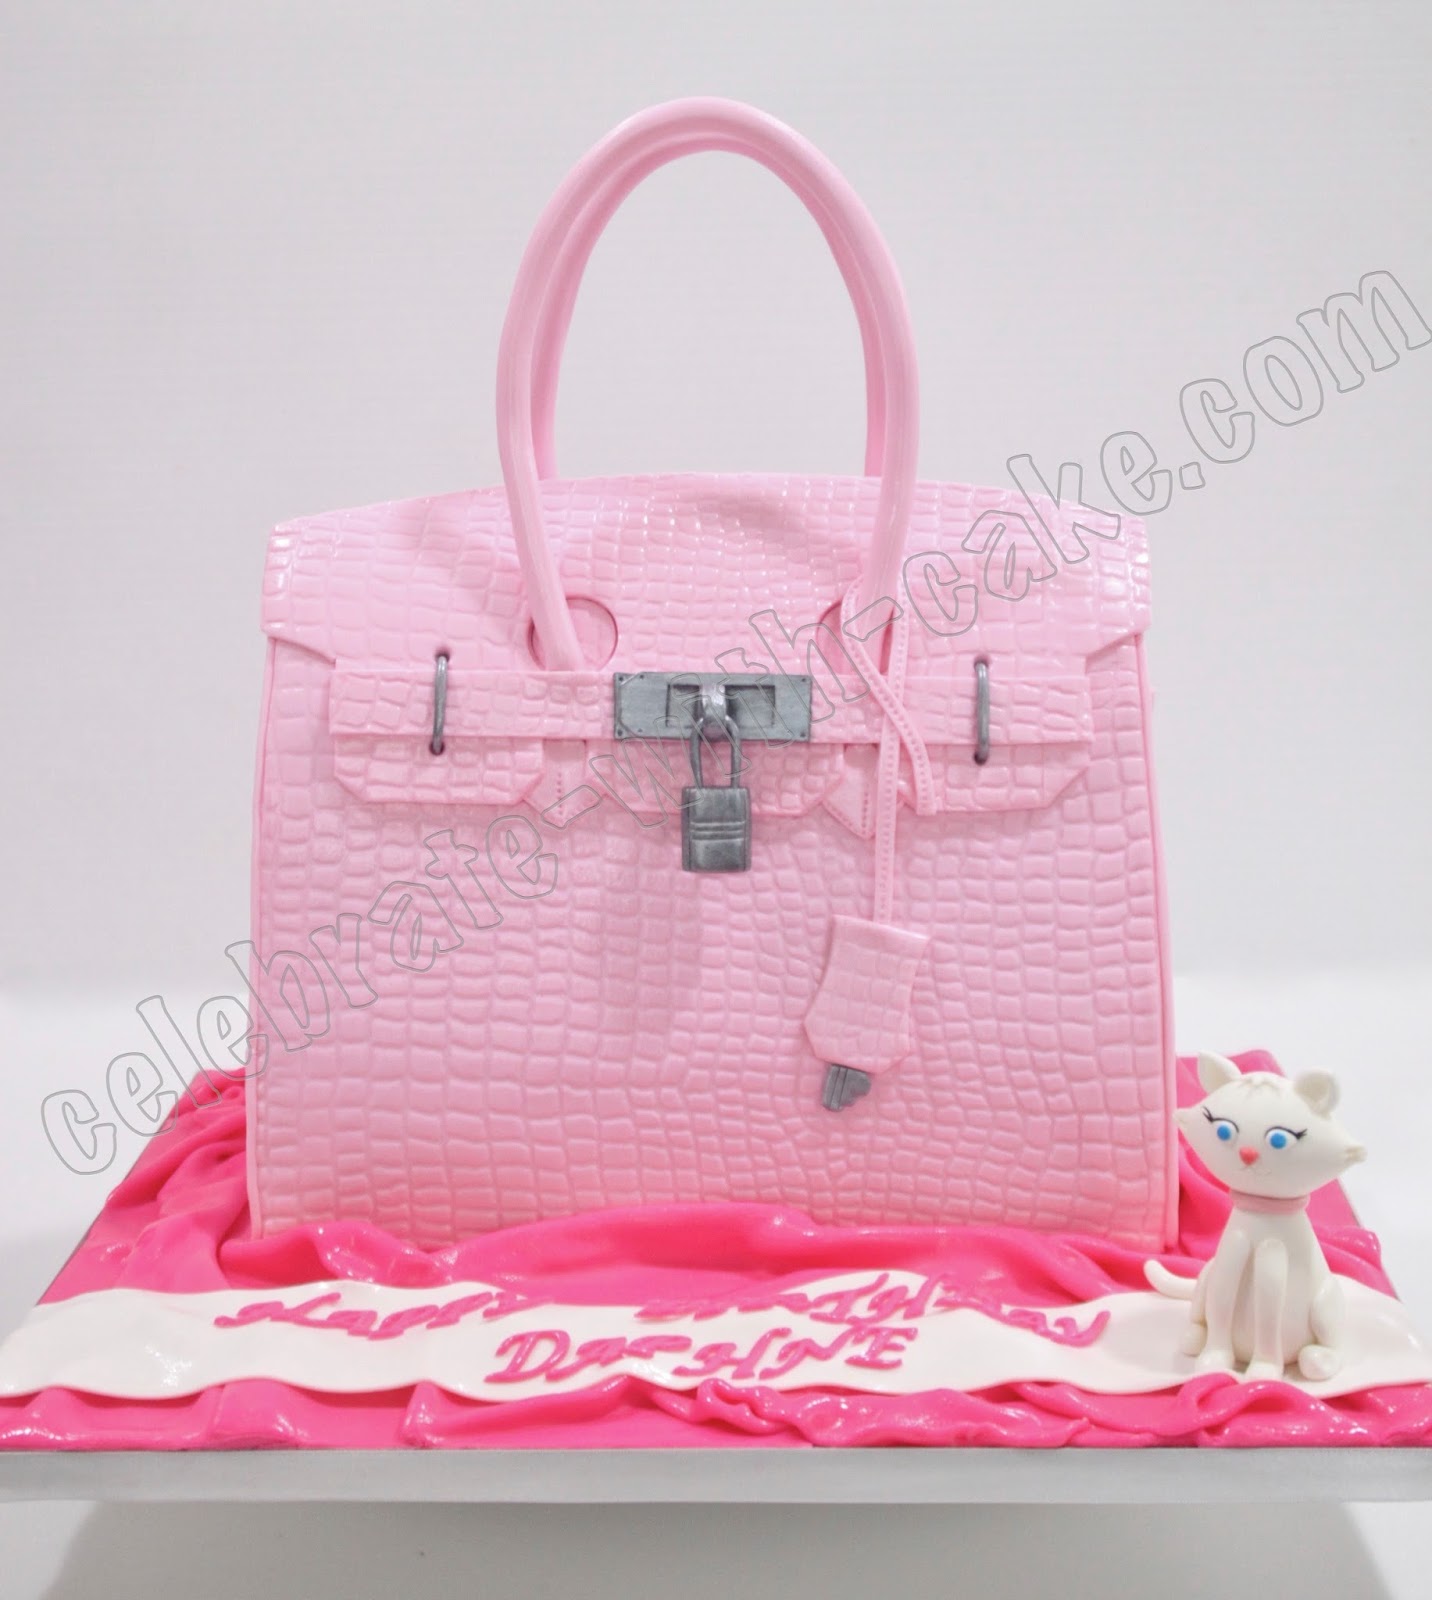 Celebrate With Cake Pink Hermes Birkin Bag Cake - roblox baby birkin